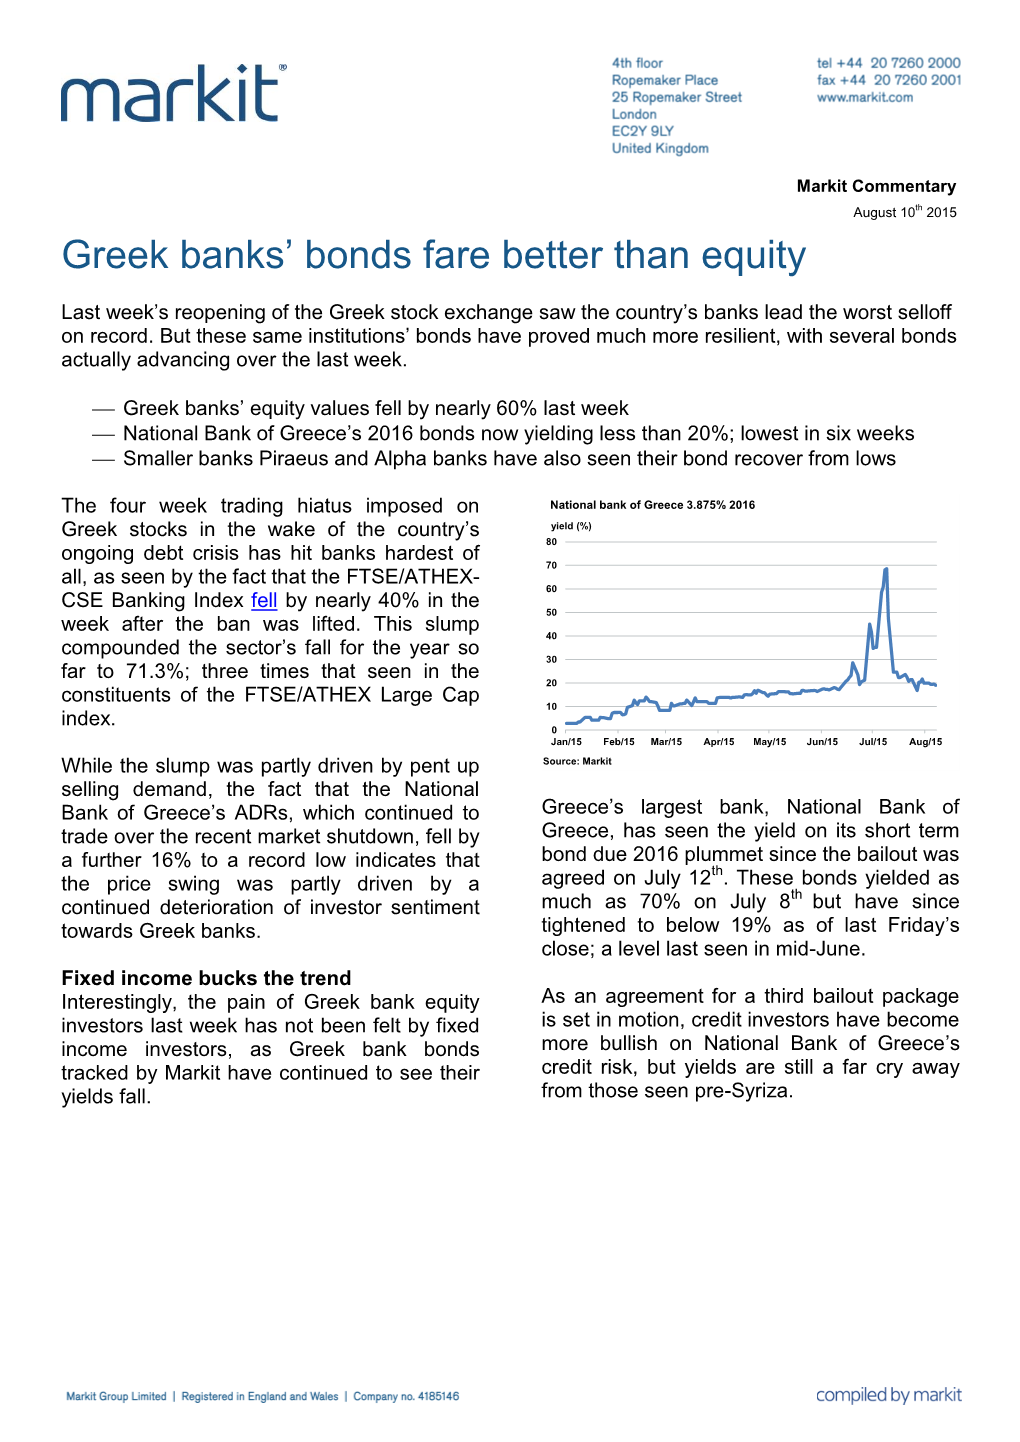 Greek Banks' Bonds Fare Better Than Equity